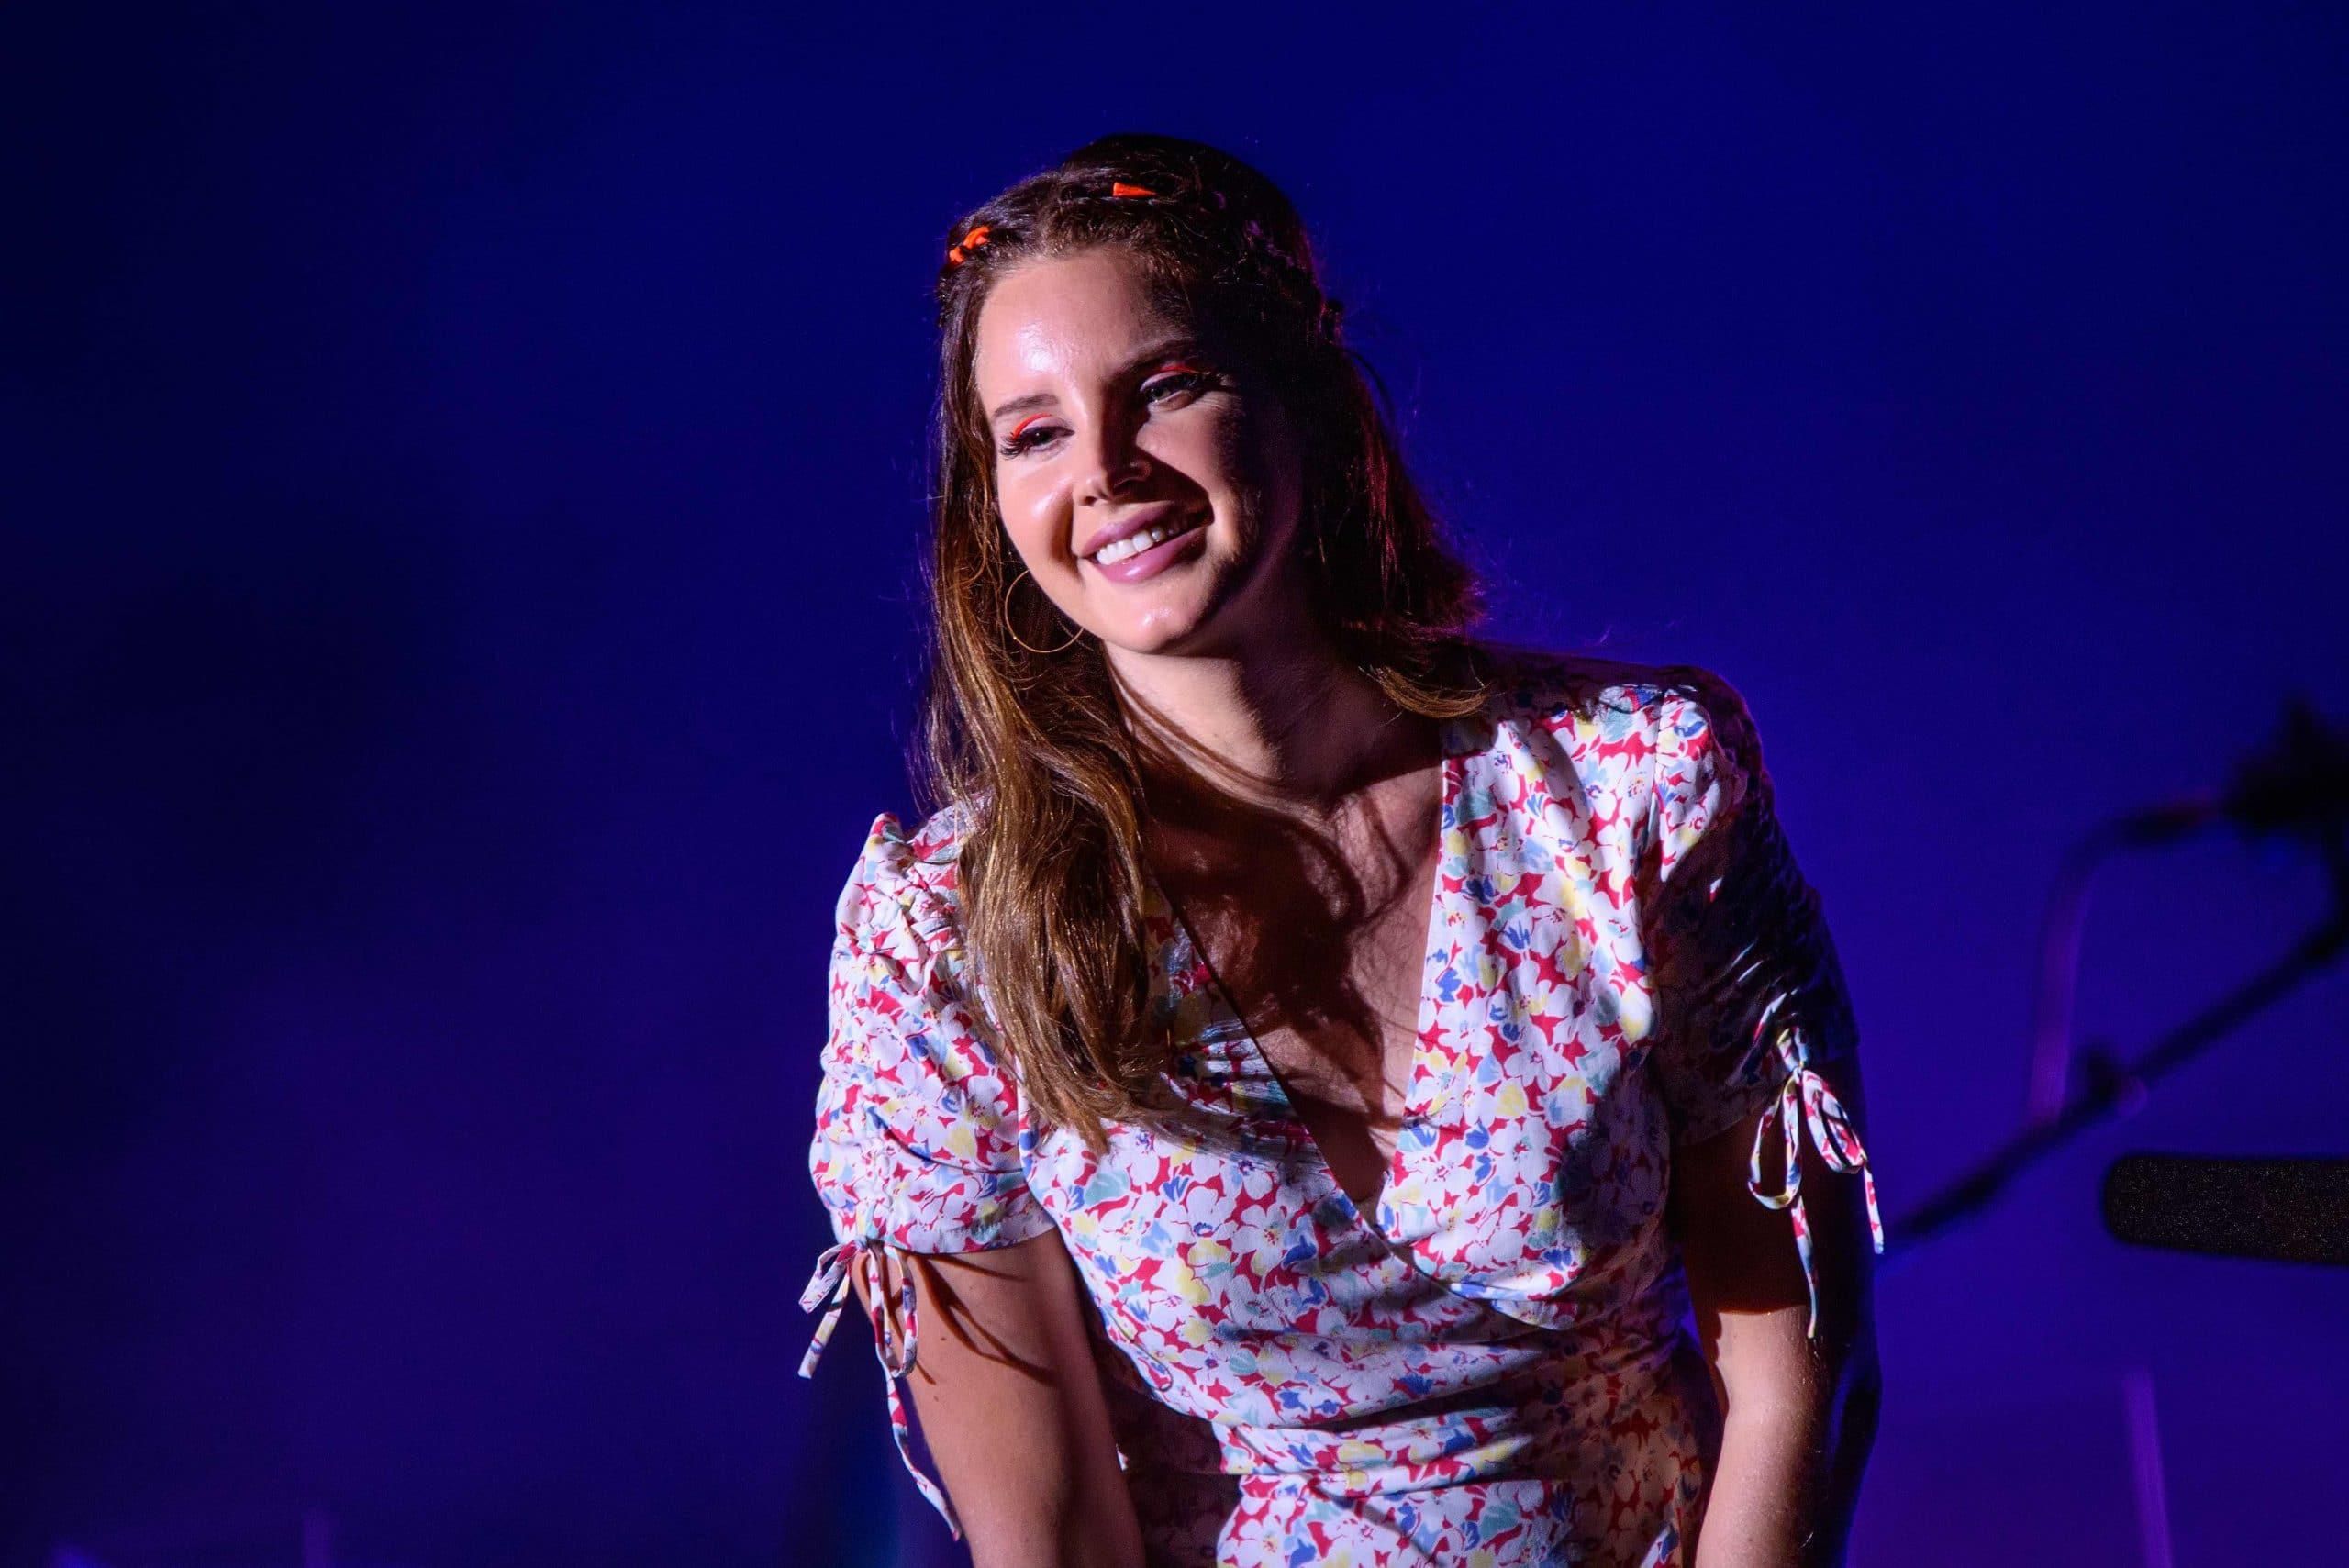 Lana del Rey in a live concert smiling